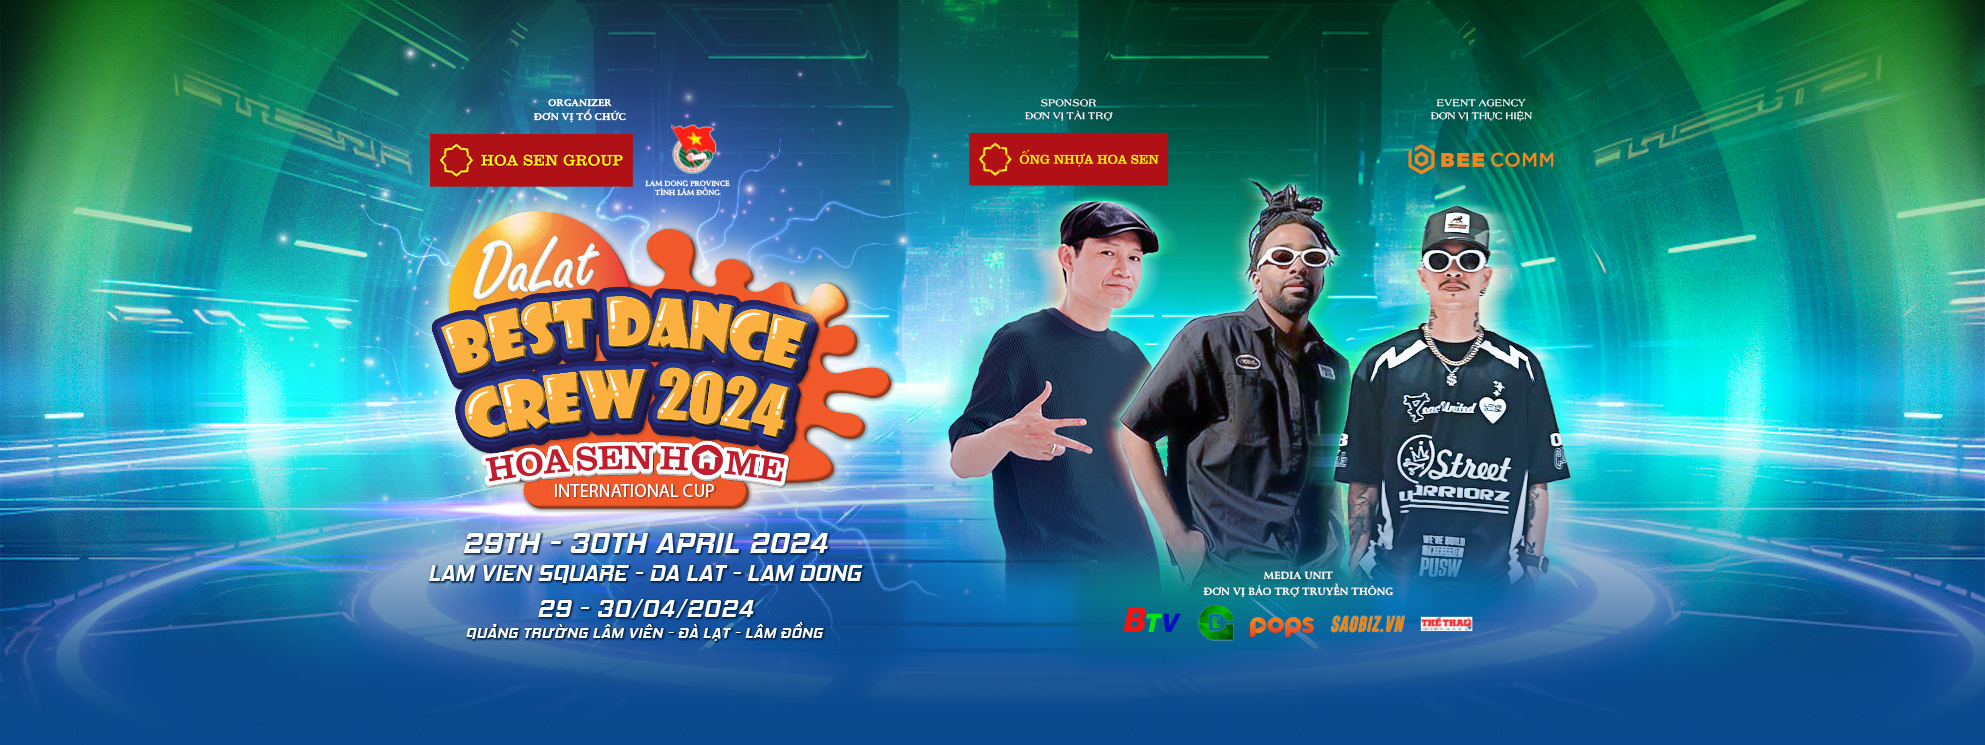 Dalat Best Dance Crew 2024 - Hoa Sen Home International Cup có gì đổi mới